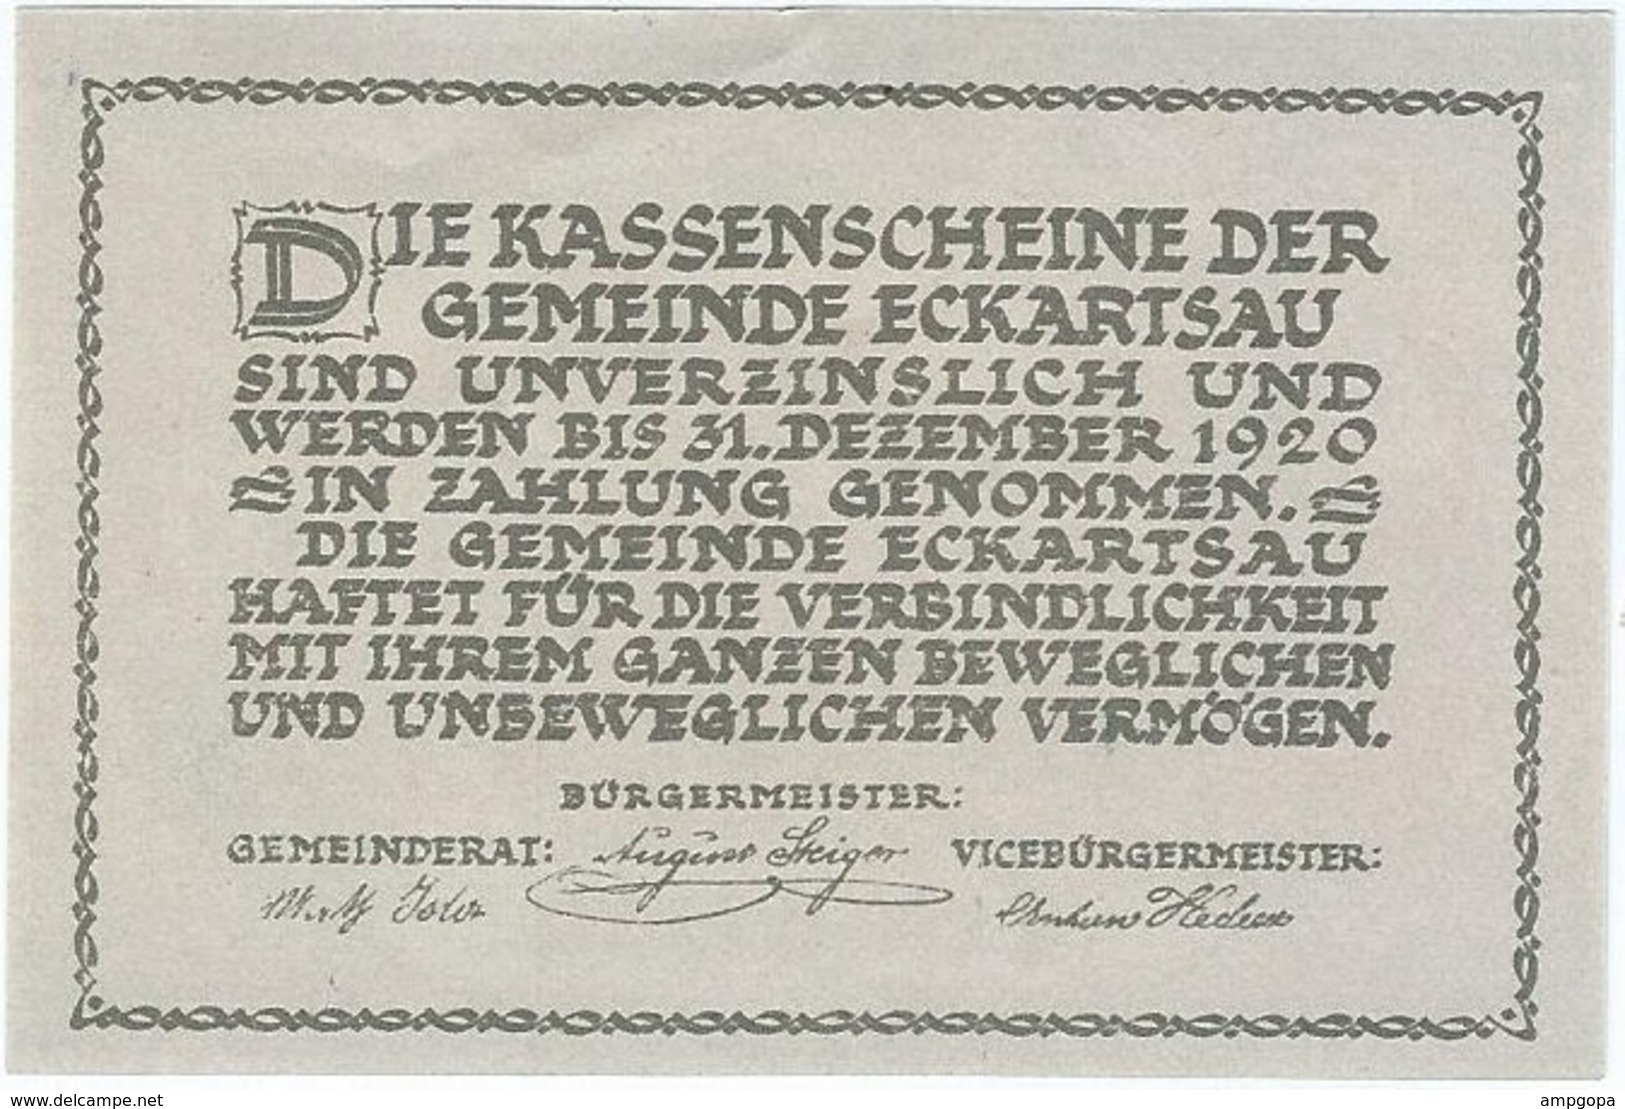 Austria (NOTGELD) 50 Heller 31-12-1920 Eckartsau KON 149 A.3 UNC Ref 3550-1 - Austria